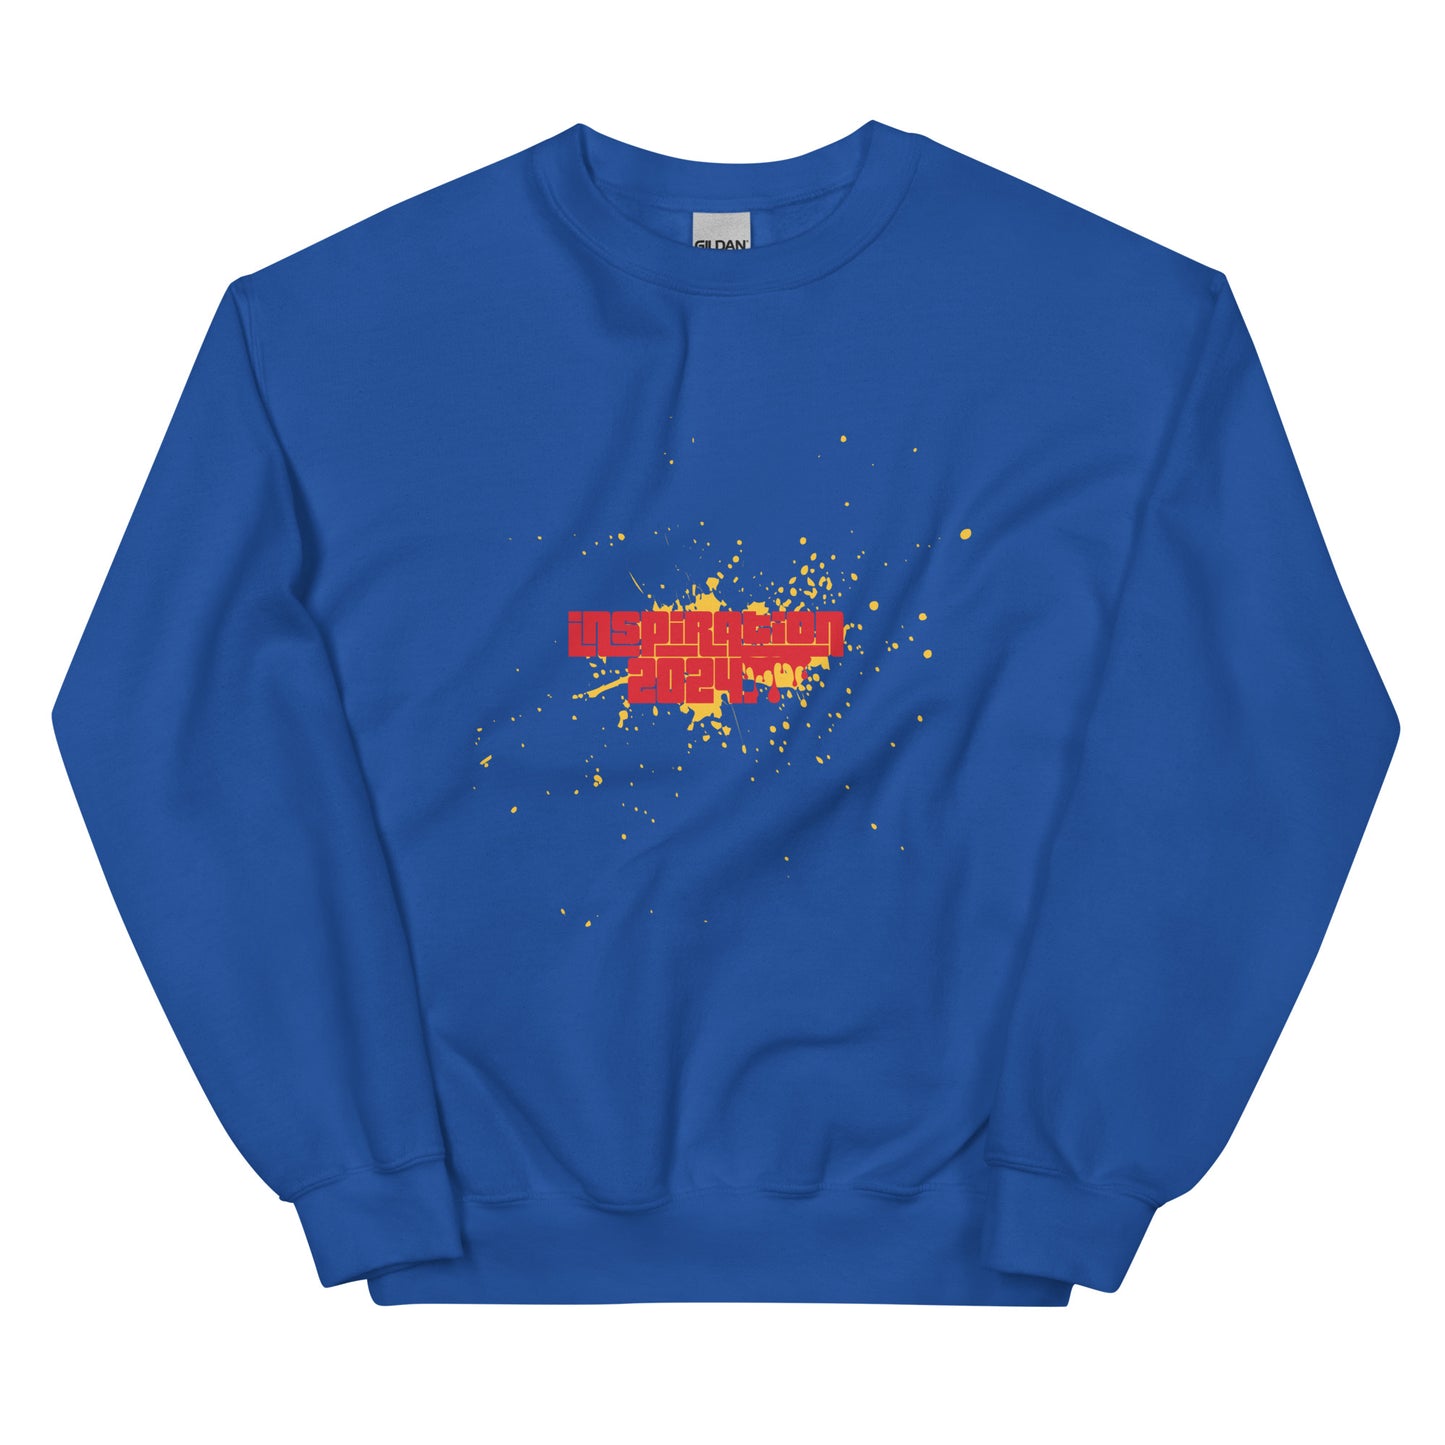 Inspiration Unisex Sweatshirt by Amagiri Young